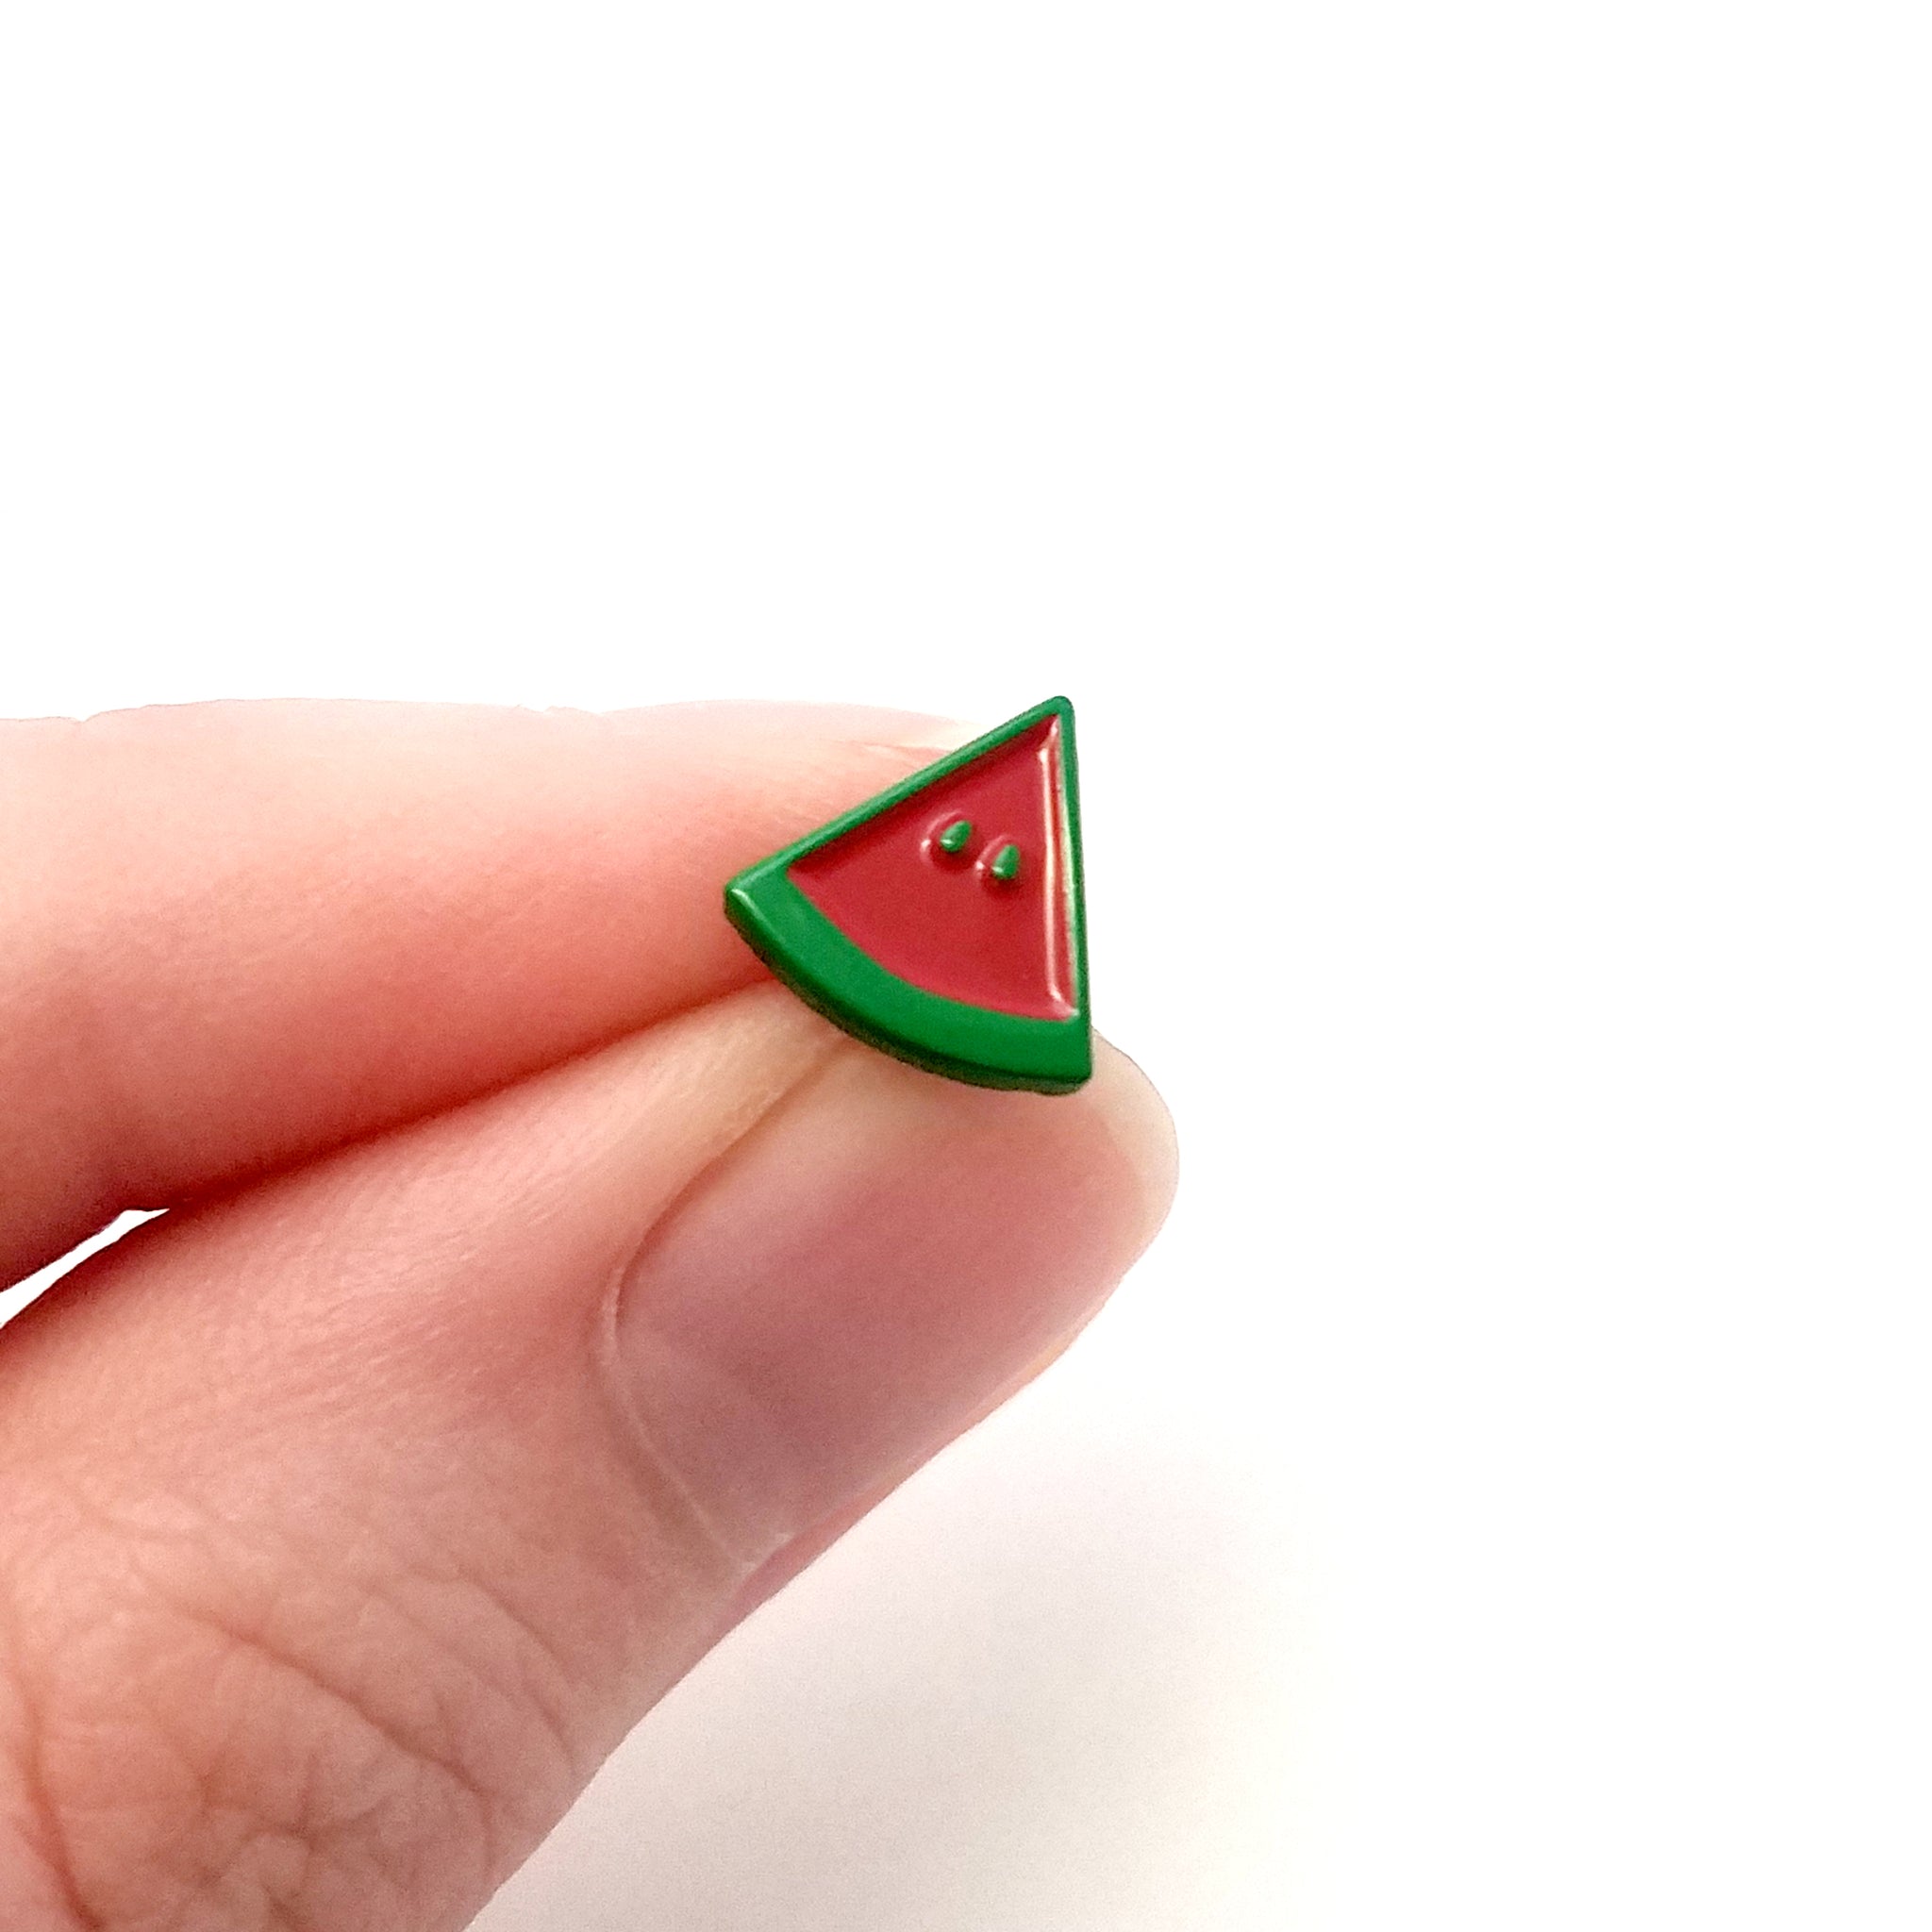 Watermelon Slice Pin Set - 3 piece